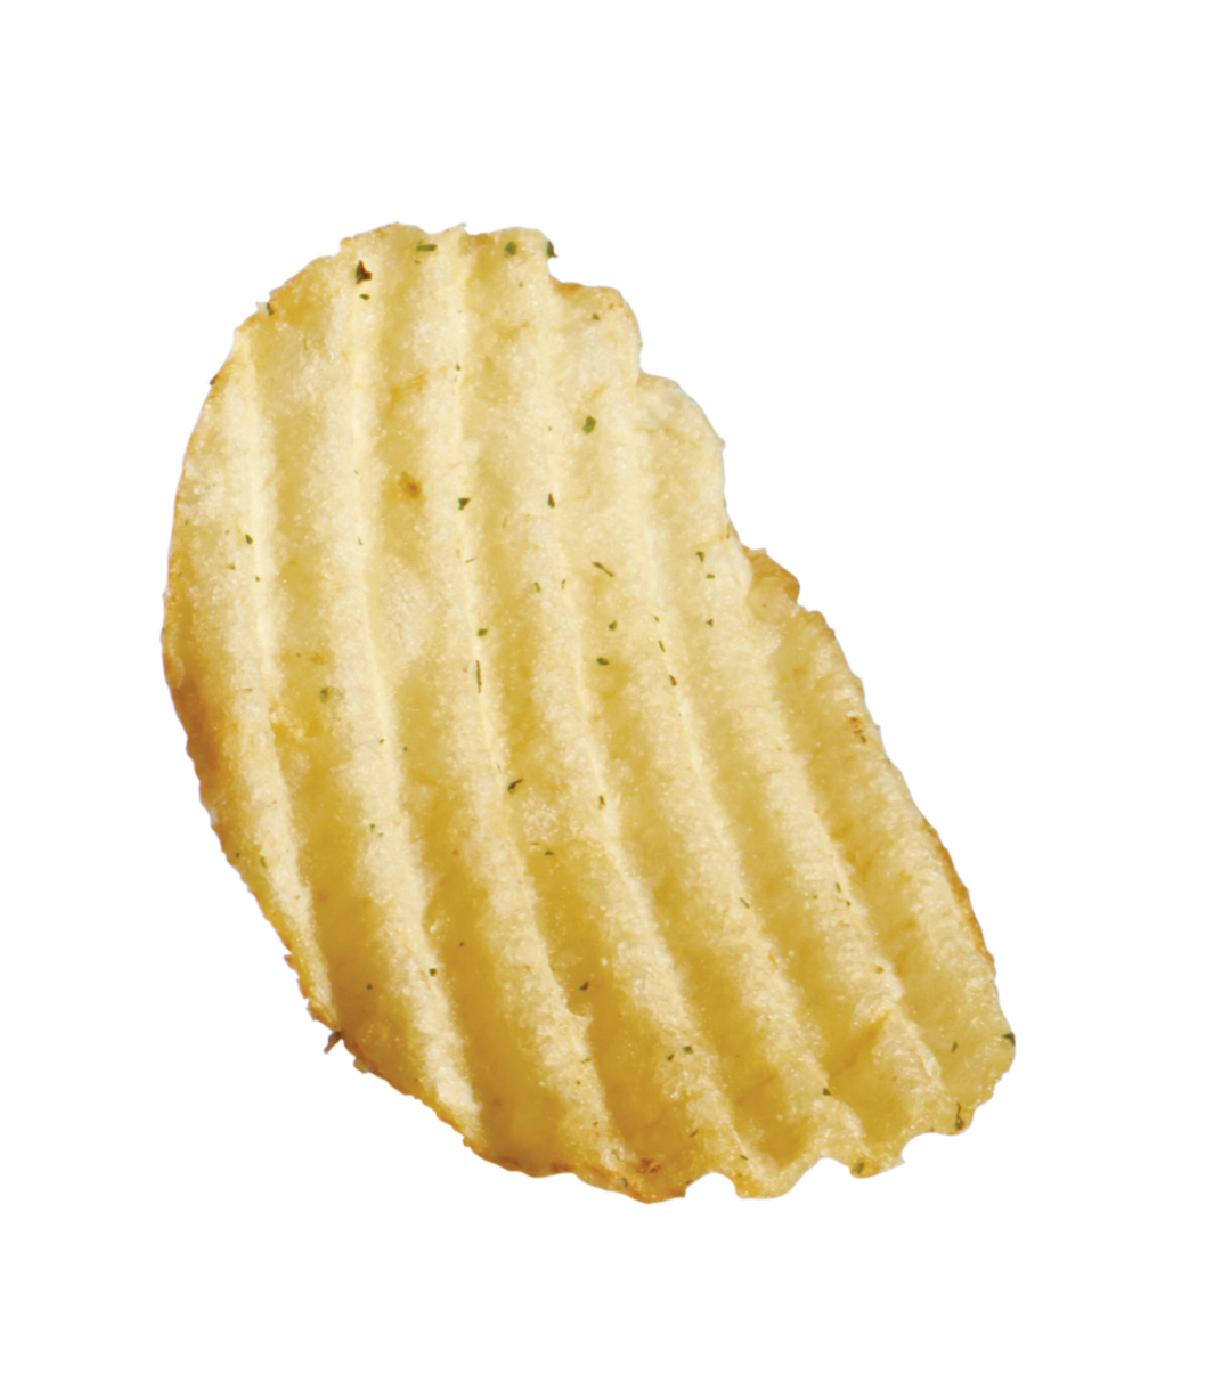 H-E-B Wavy Potato Chips - Sour Cream & Onion; image 2 of 3